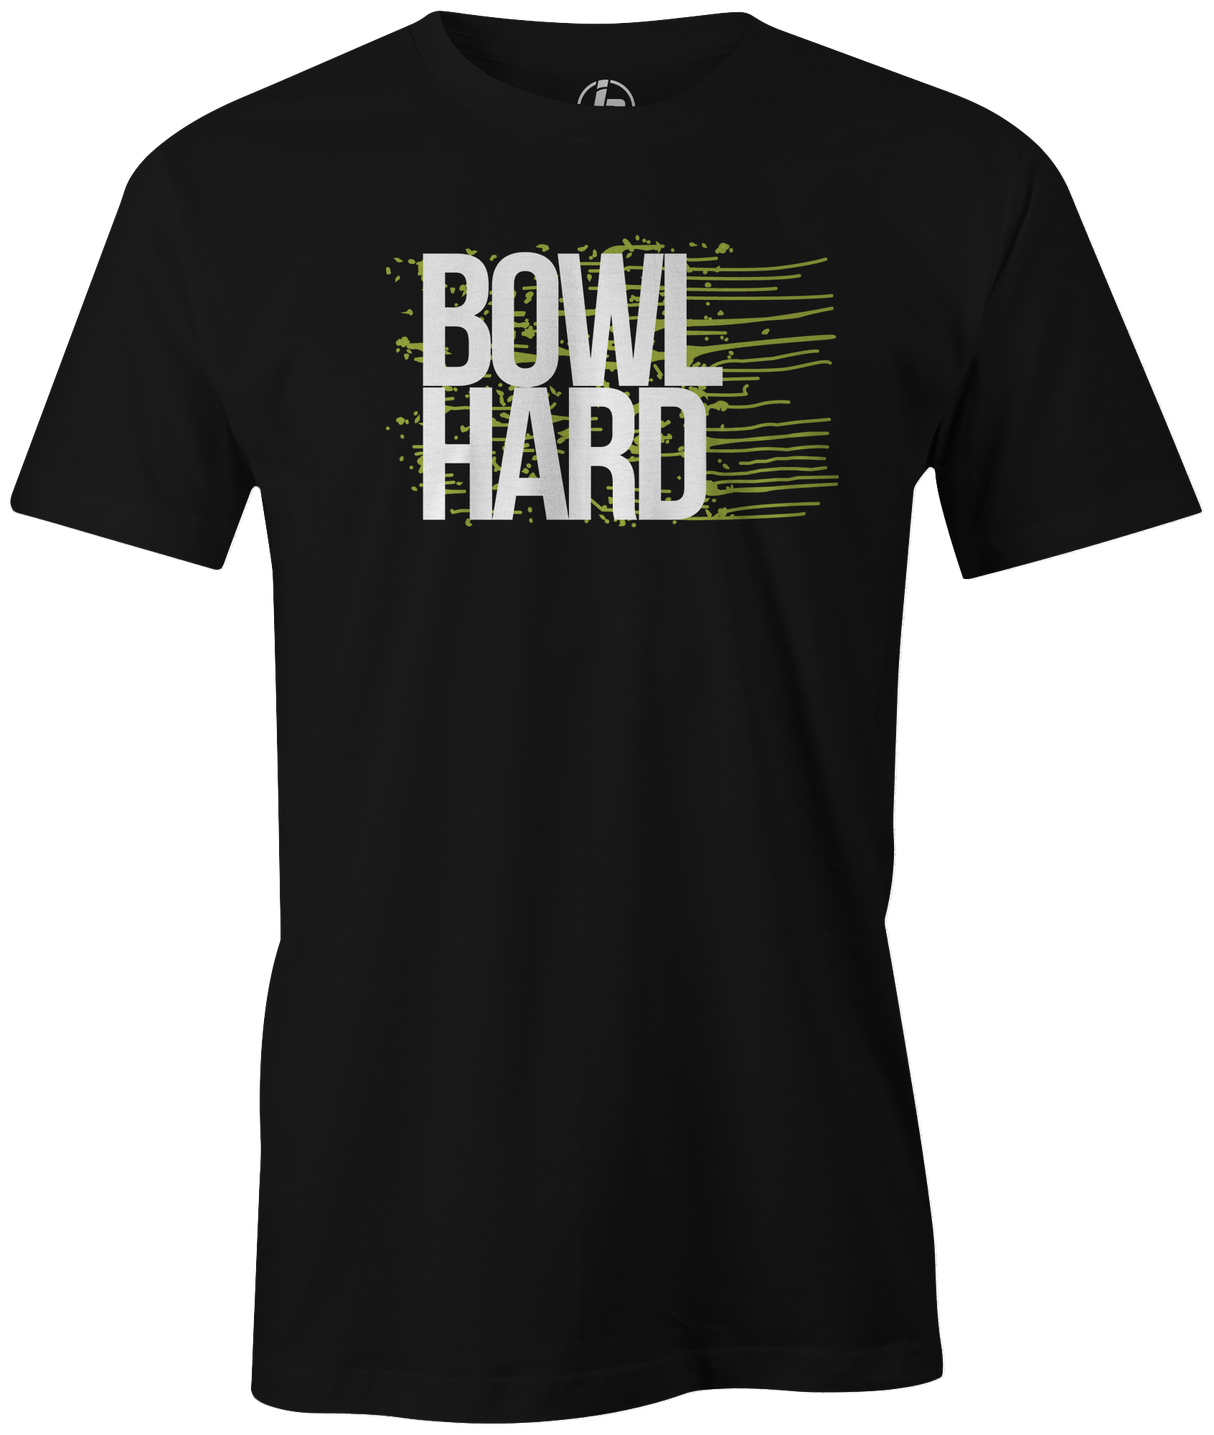 Bowl Hard